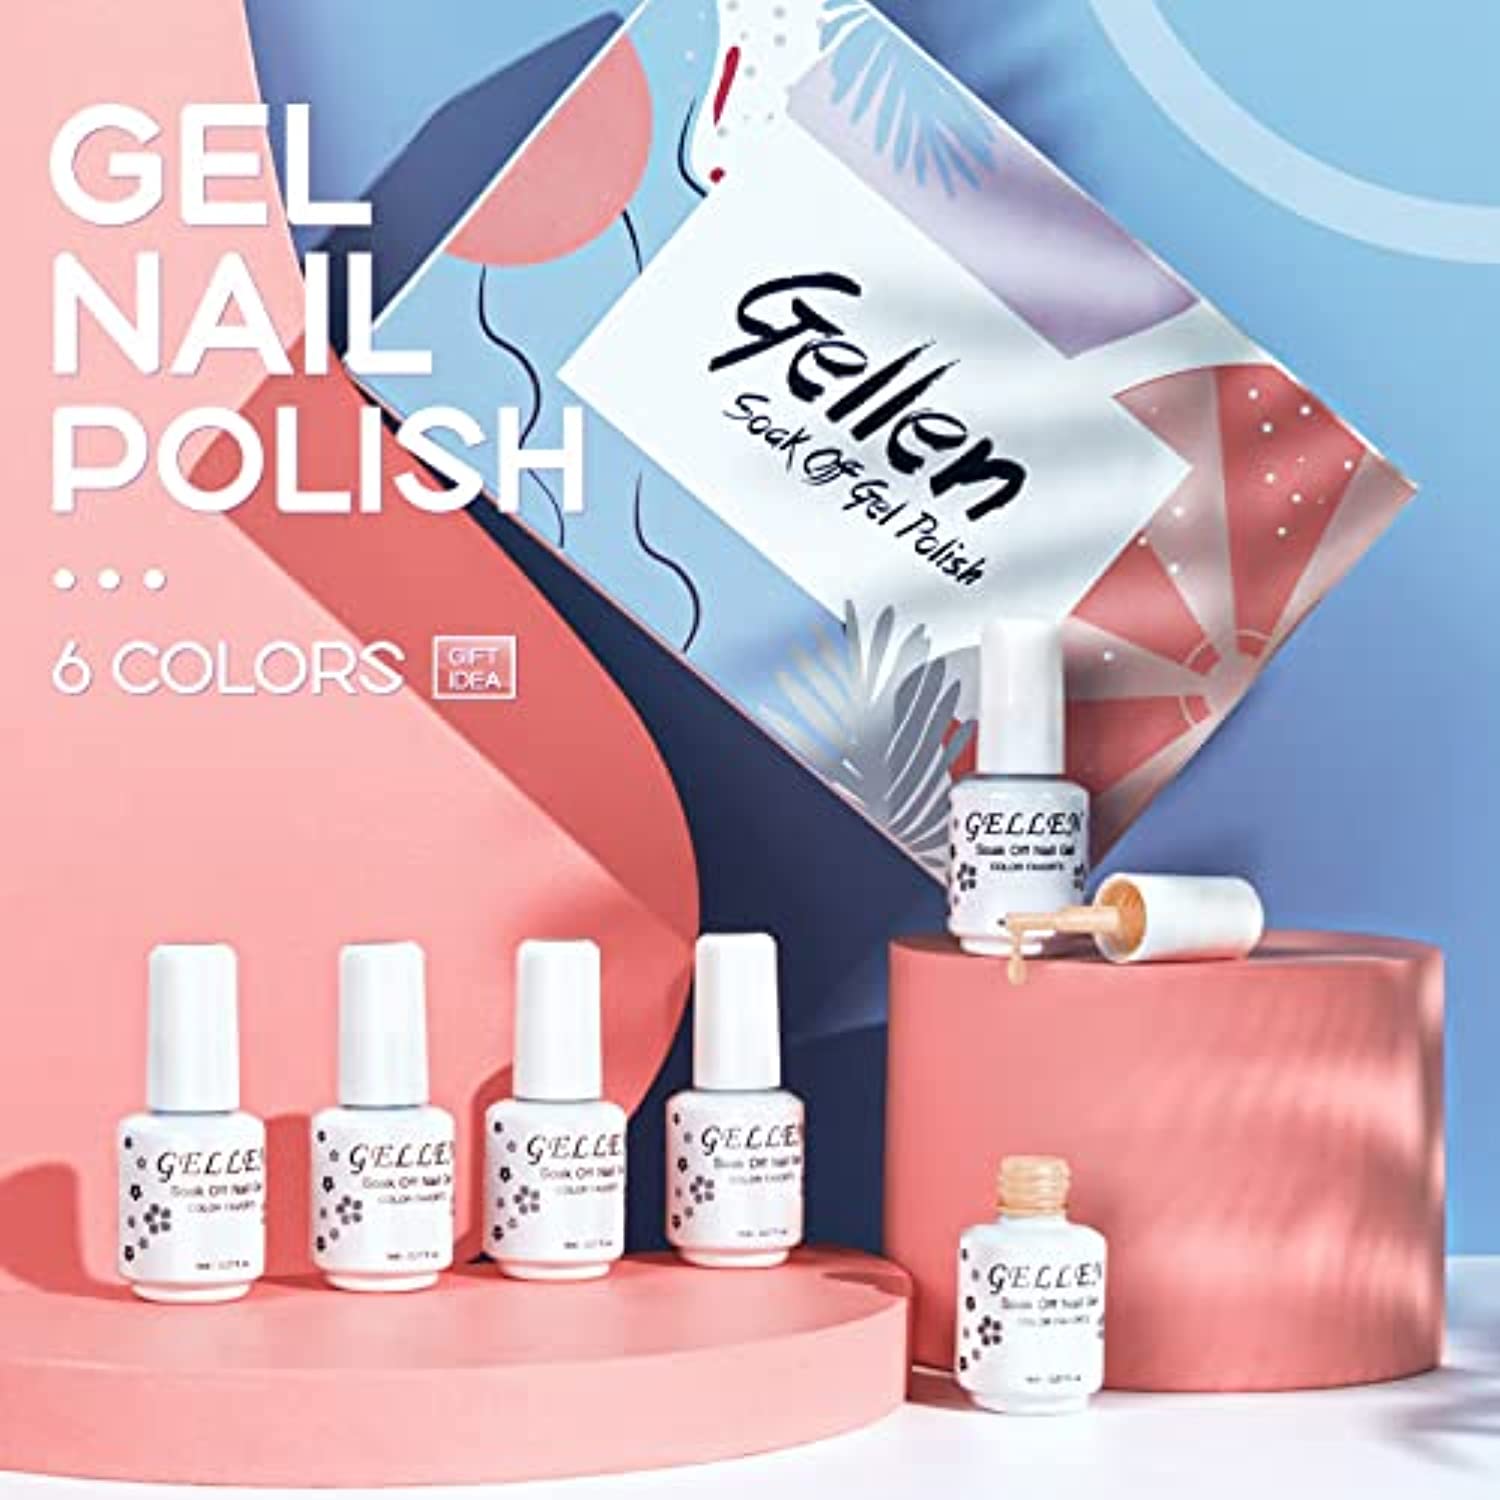 Gellen Gel Nail Polish Kit- Gentle Nudes Series Nude Neutrals 6 Colors, Warm Pastels Beige Pink Soak Off Gel Polish Set